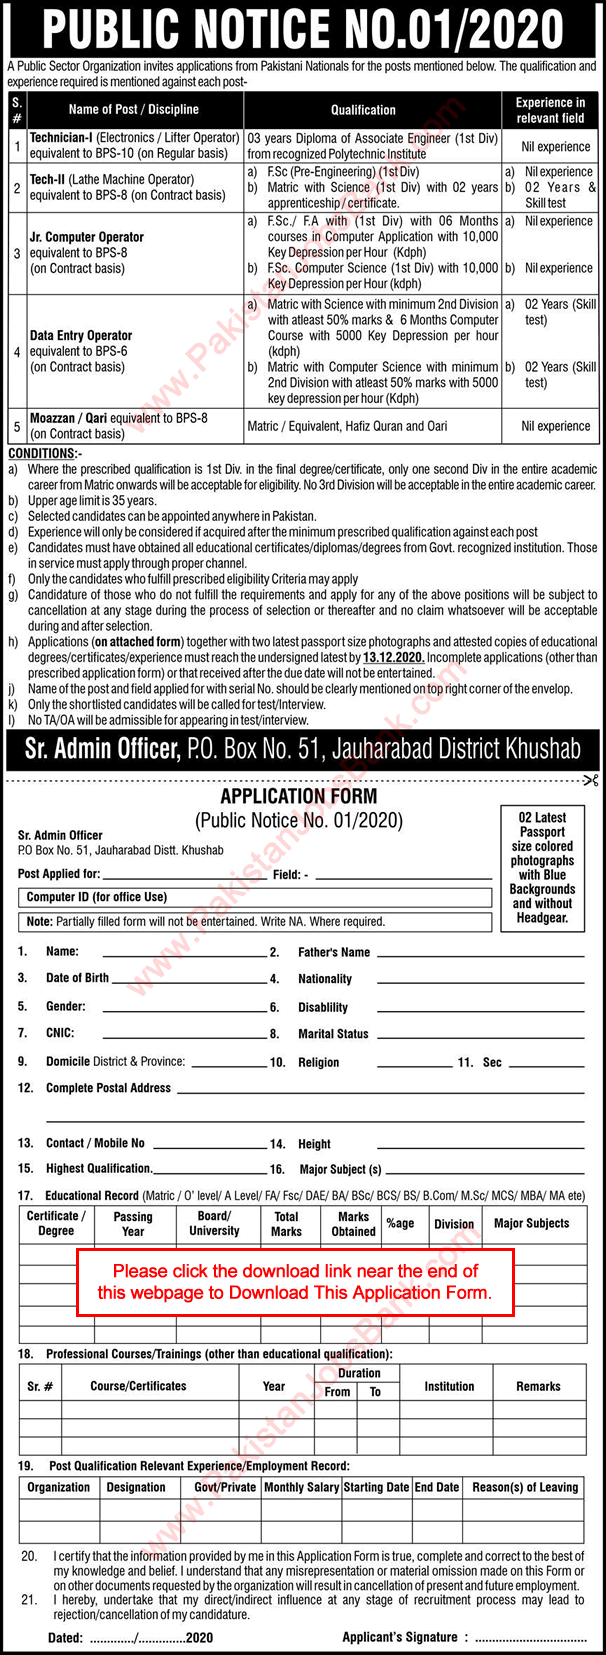 PO Box 51 Jauharabad Jobs 2020 November PAEC Khushab Application Form Latest